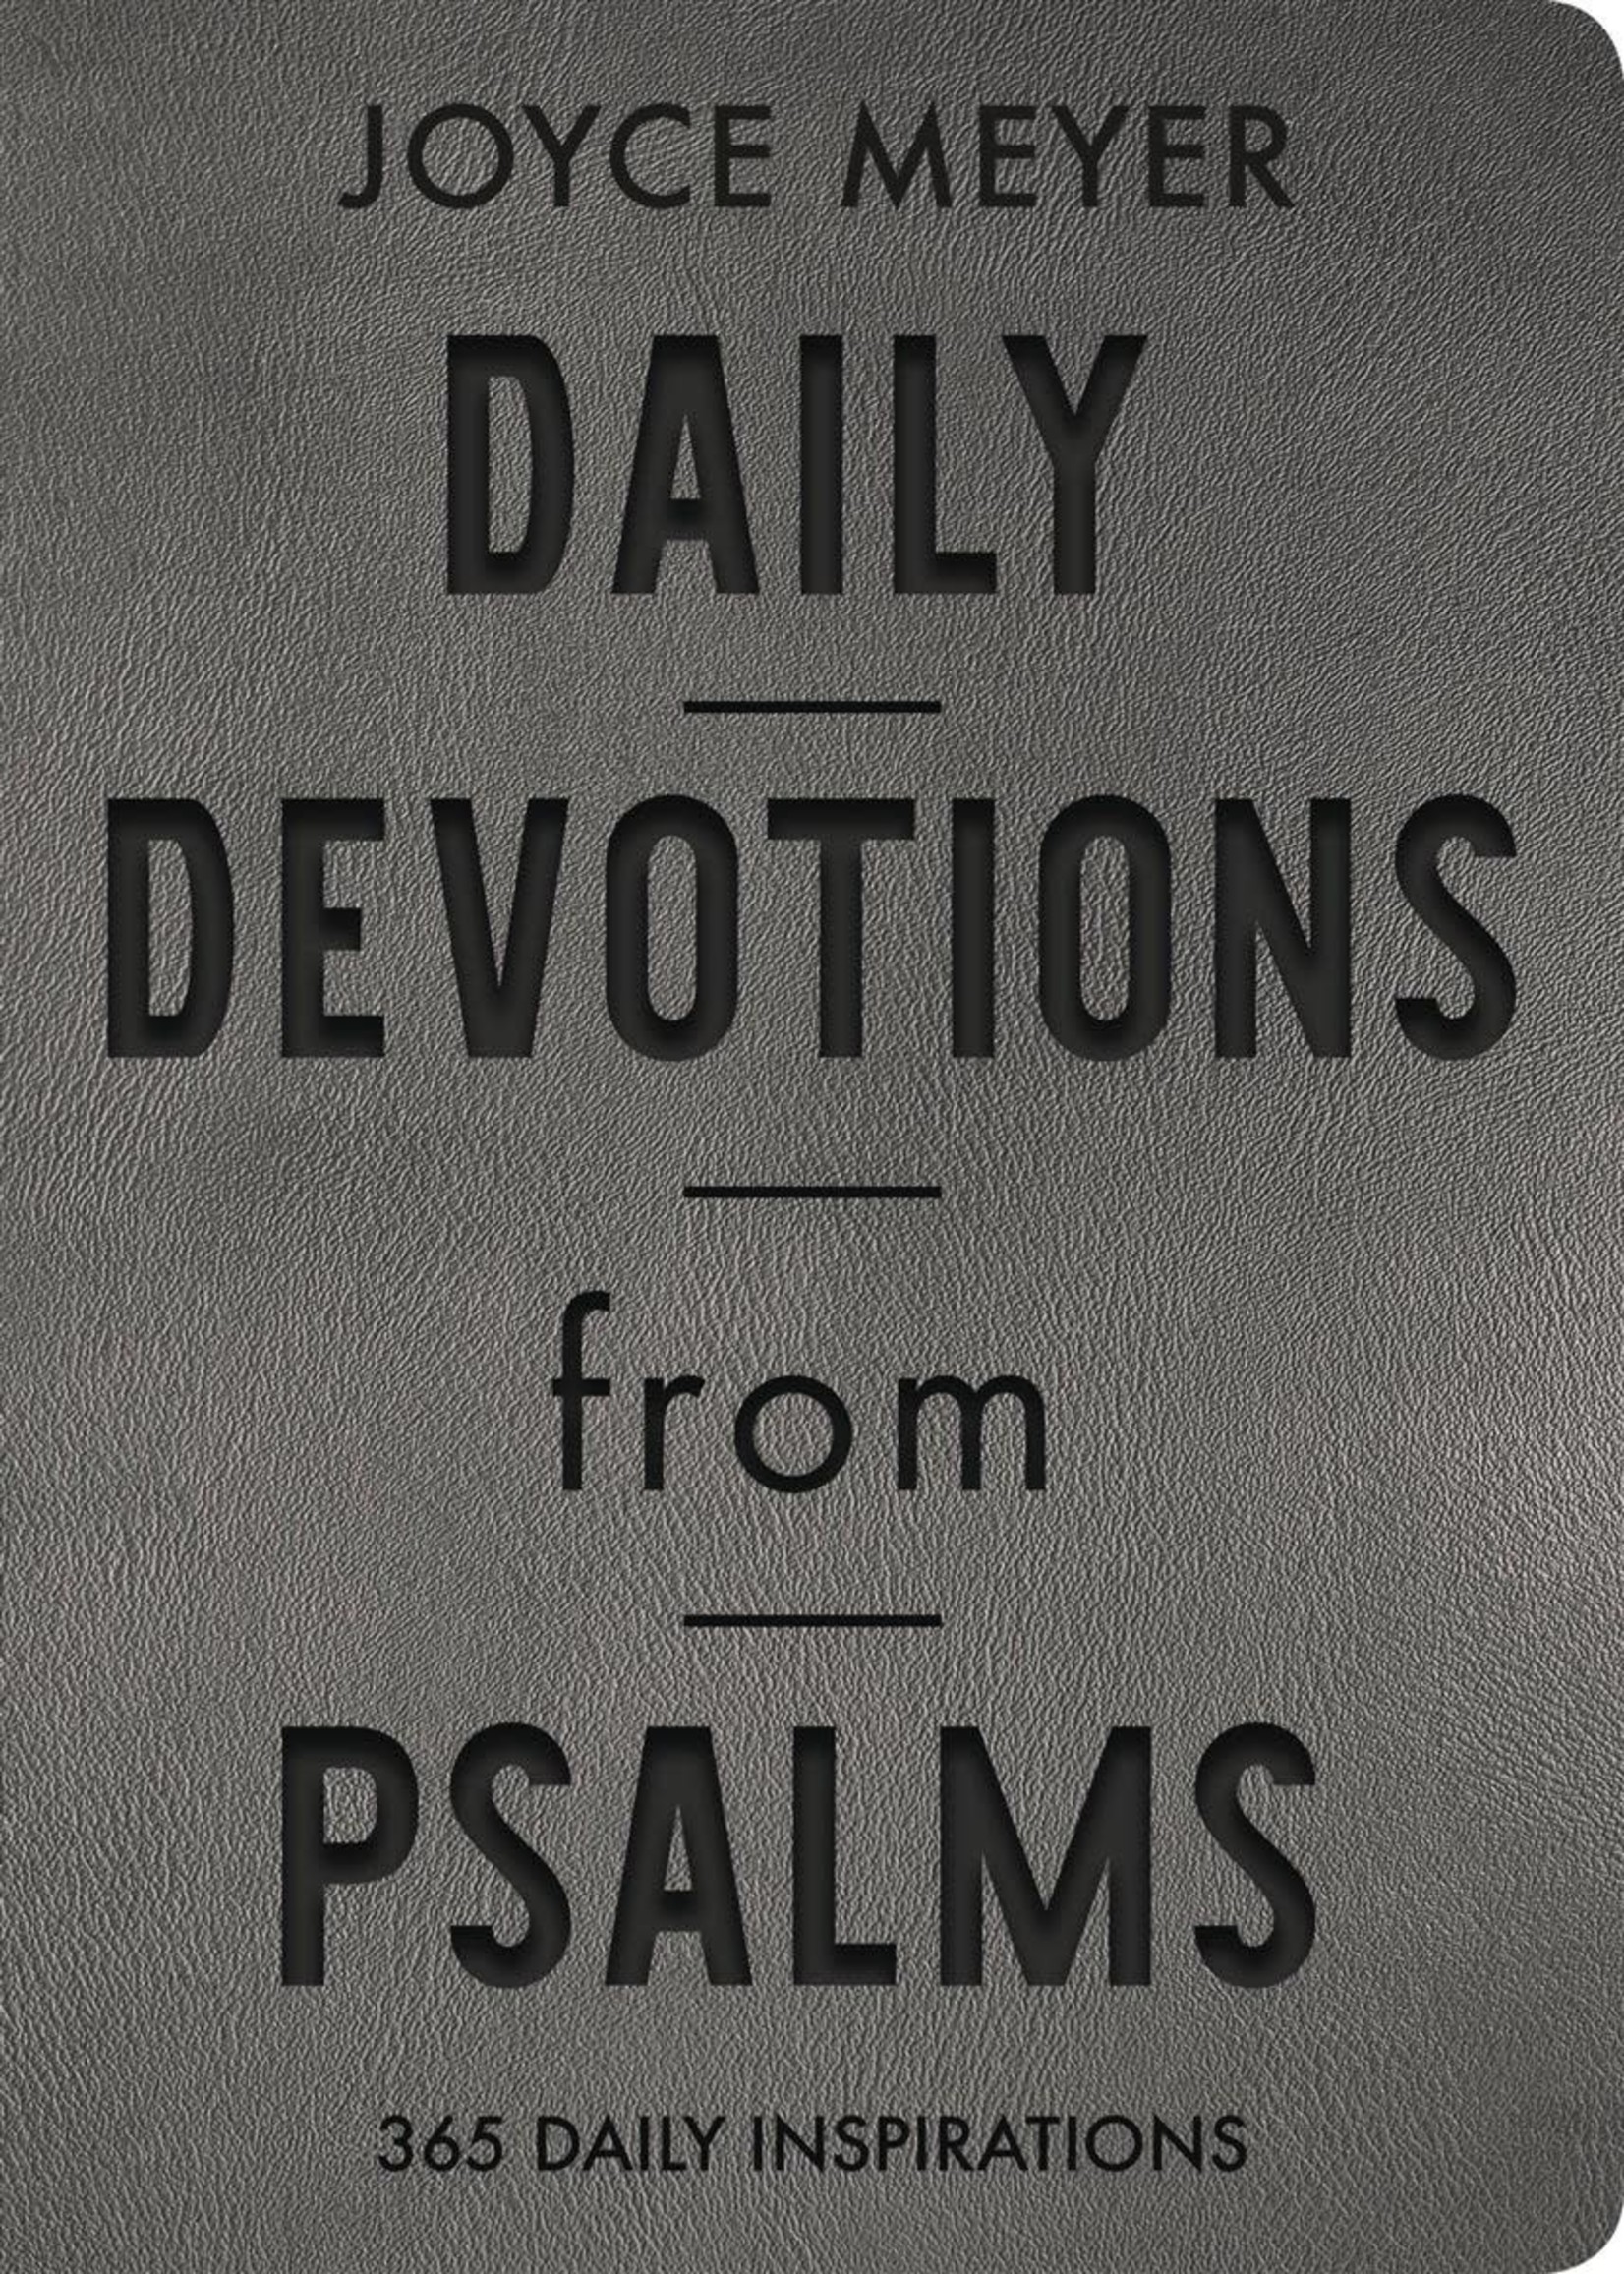 Daily Devotions from Psalms: 365 Daily Inspirations by Joyce Meyer